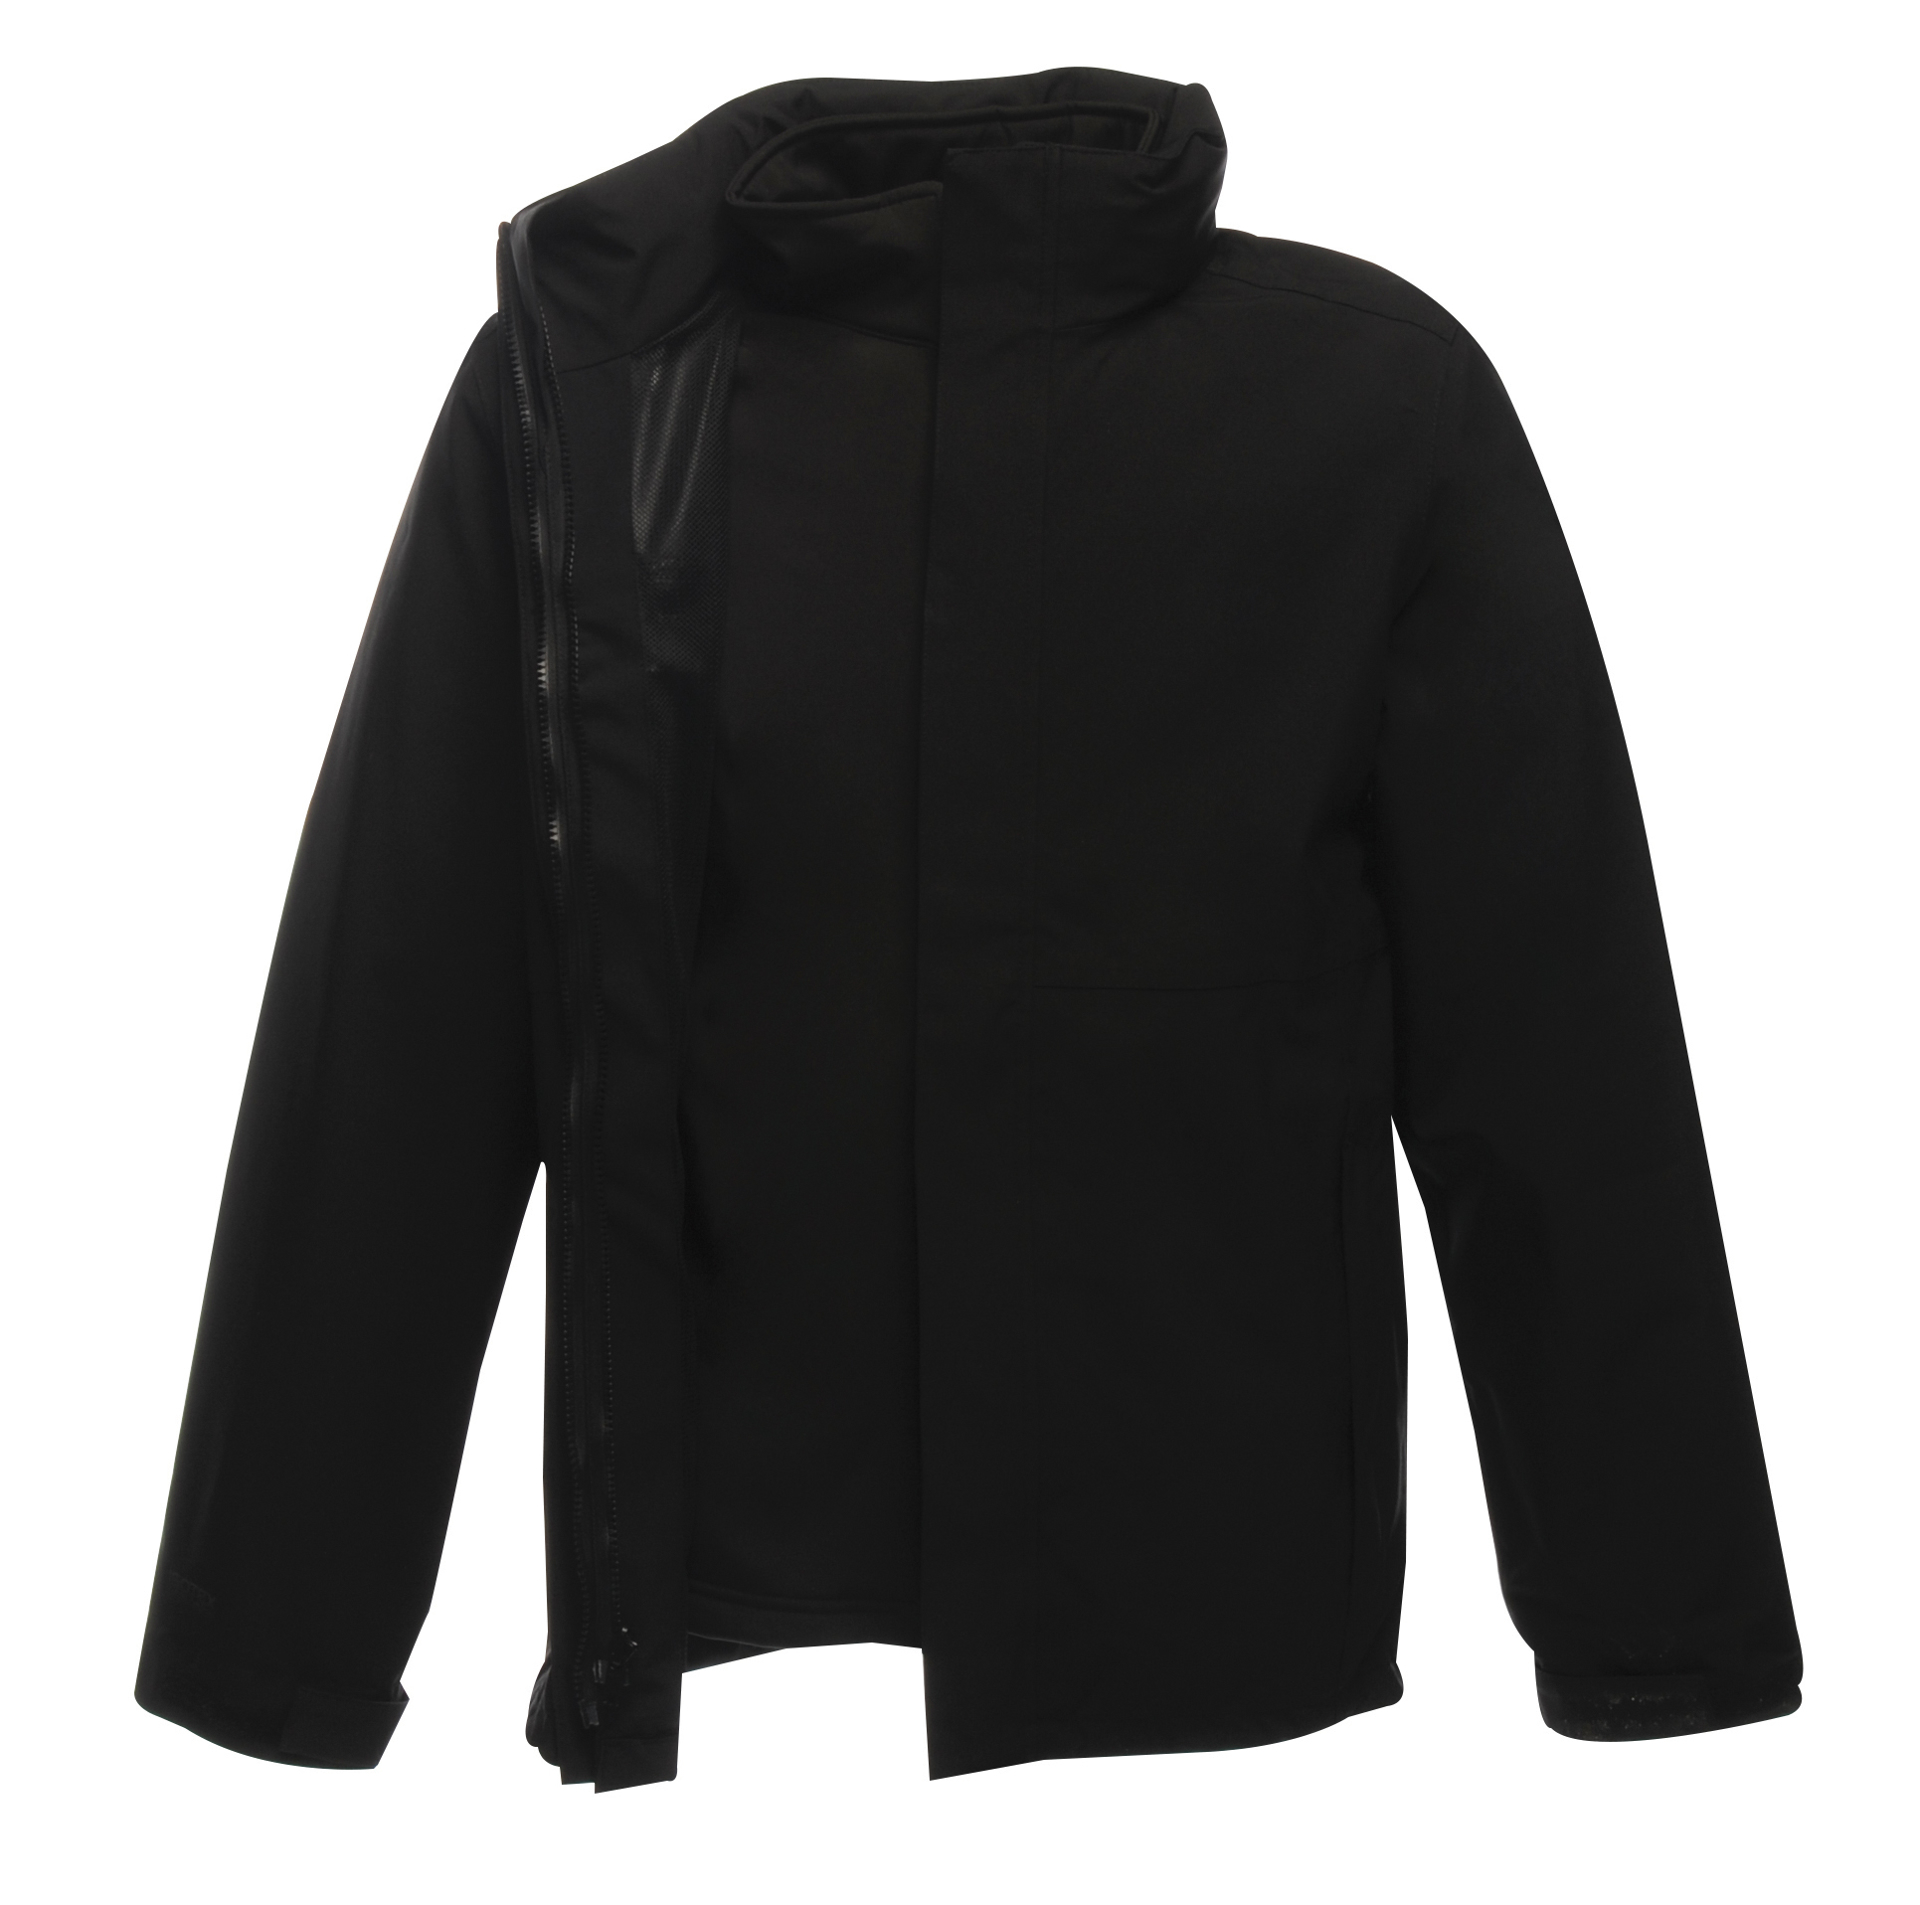 Kingsley 3-in-1 Jacket in black